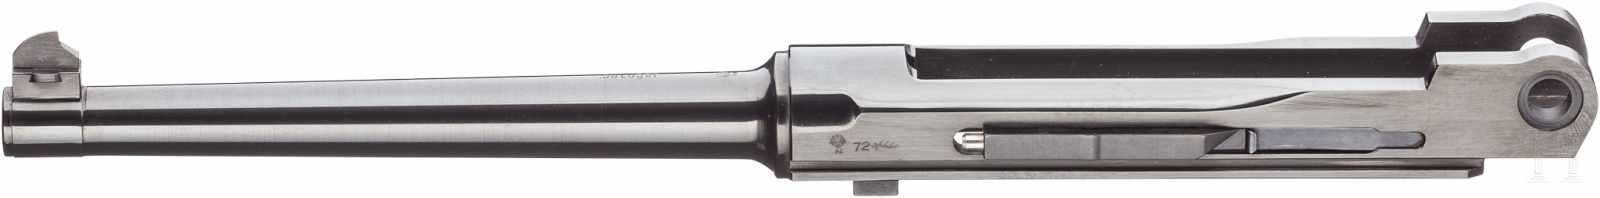 Parabellum Mod 29/70 mit W-Lauf im KartonKal. 9mm Luger WL 7,65 Luger, Nr. 11.005198 WL E13. - Image 3 of 3